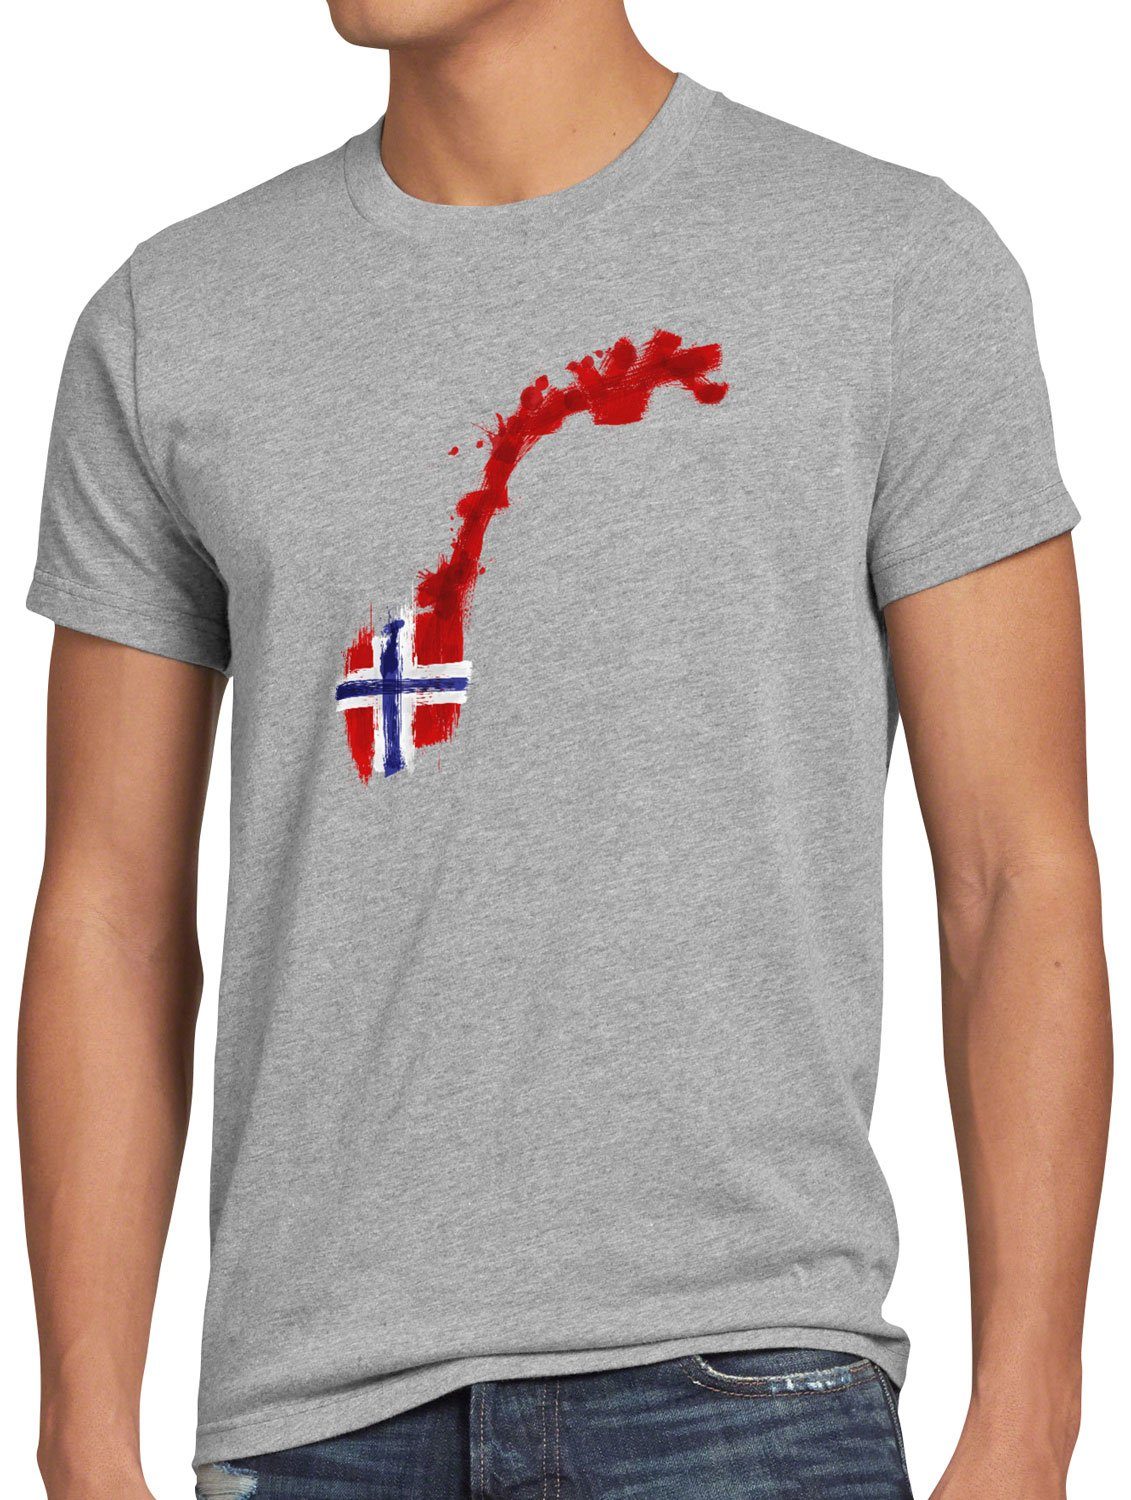 style3 Print-Shirt Herren T-Shirt Flagge Norwegen Fußball Sport Norway WM EM Fahne grau meliert